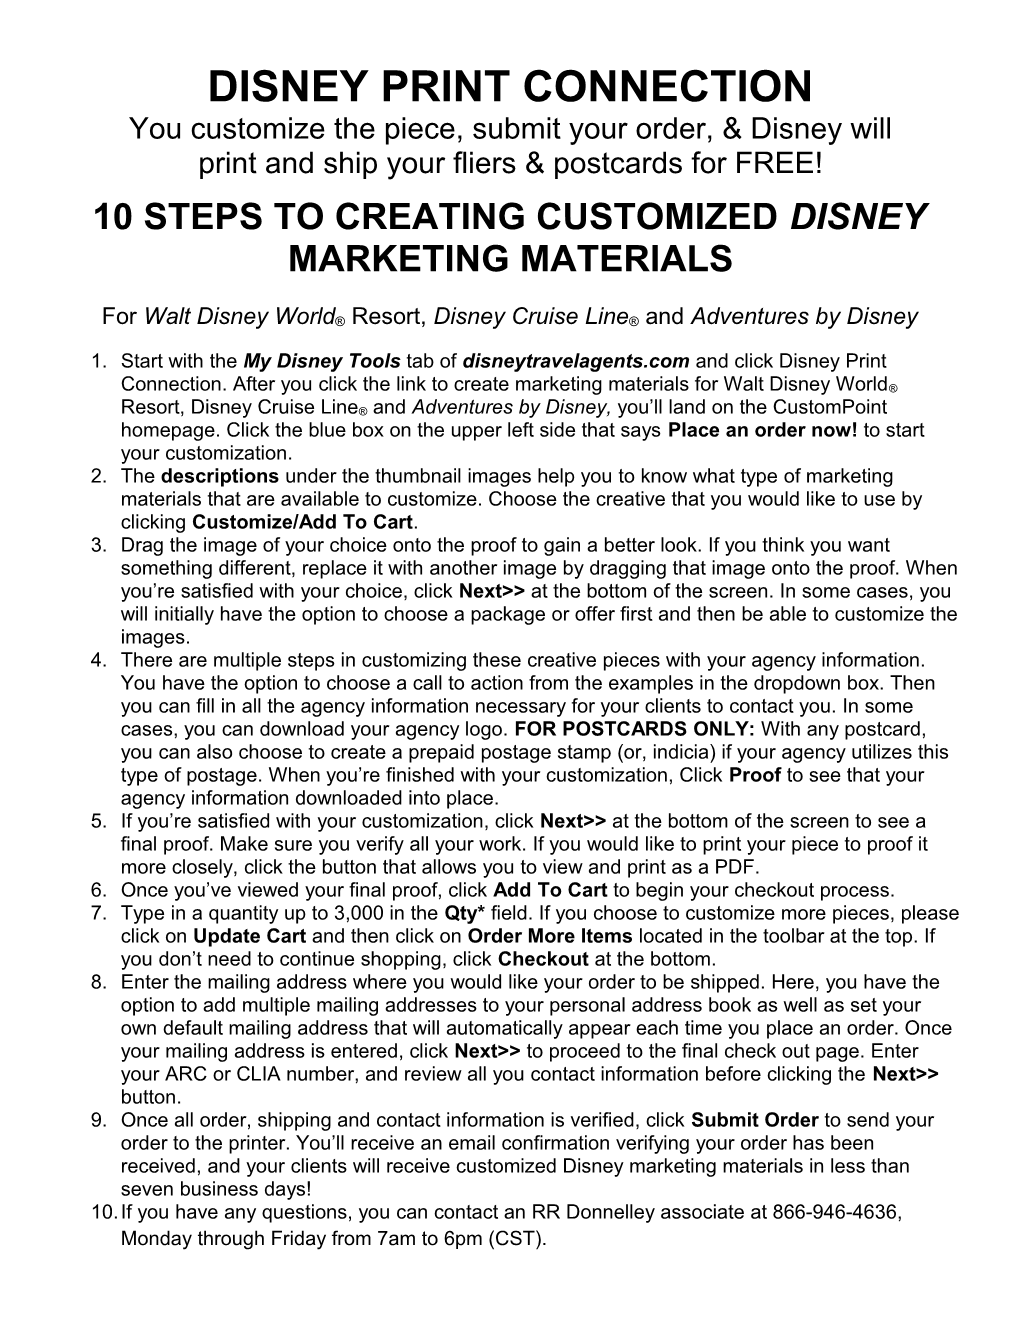 Disney Print Connection